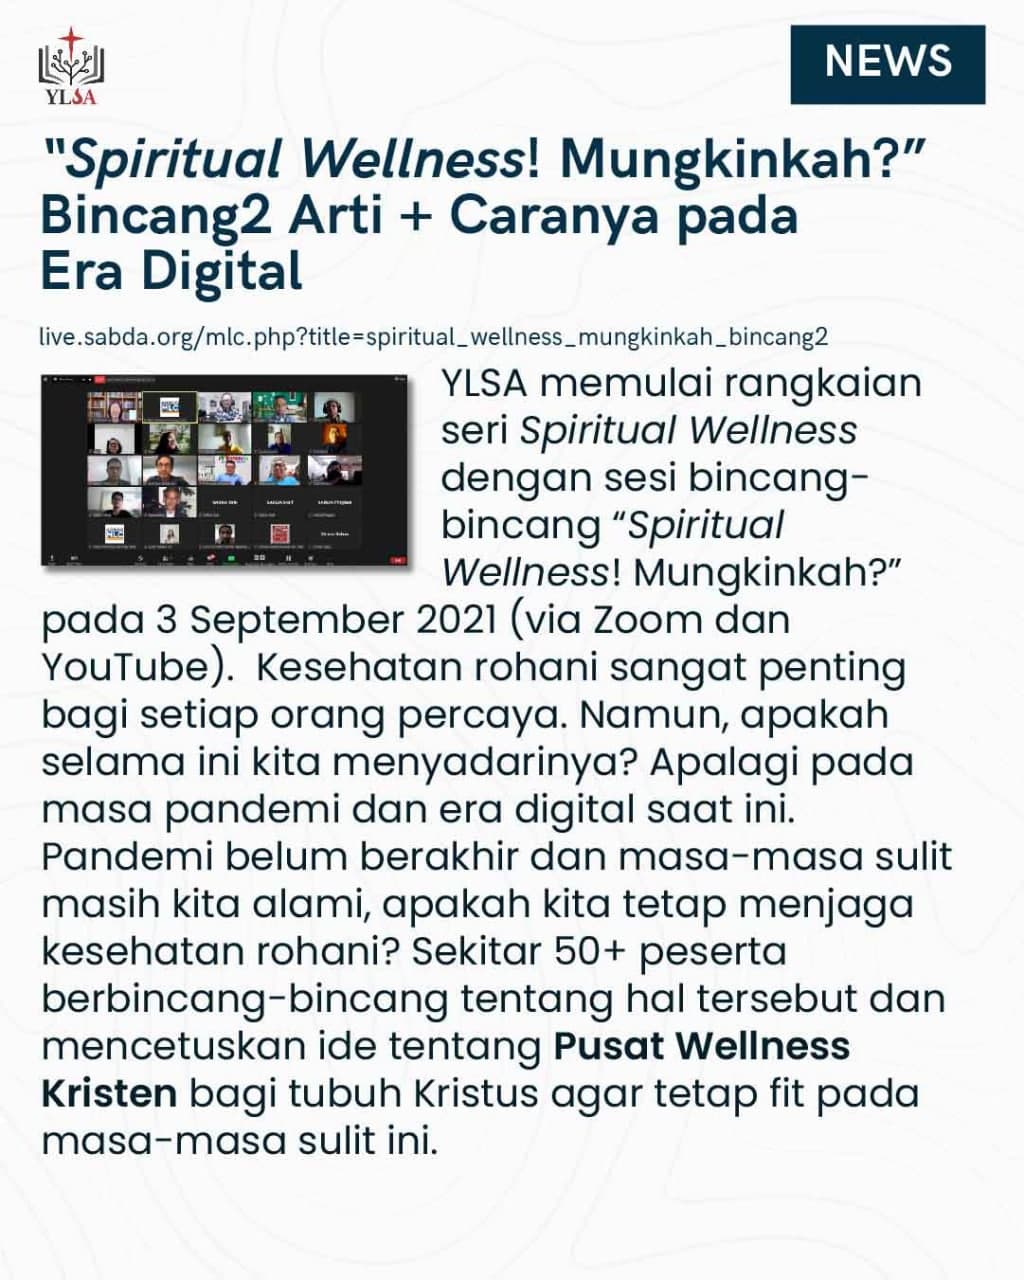 Sesi 'Spiritual Wellness! Mungkinkah? Bincang2 Arti + Caranya pada Era Digital' mendiskusikan tentang kesehatan rohani pada masa pandemi dan era digital.